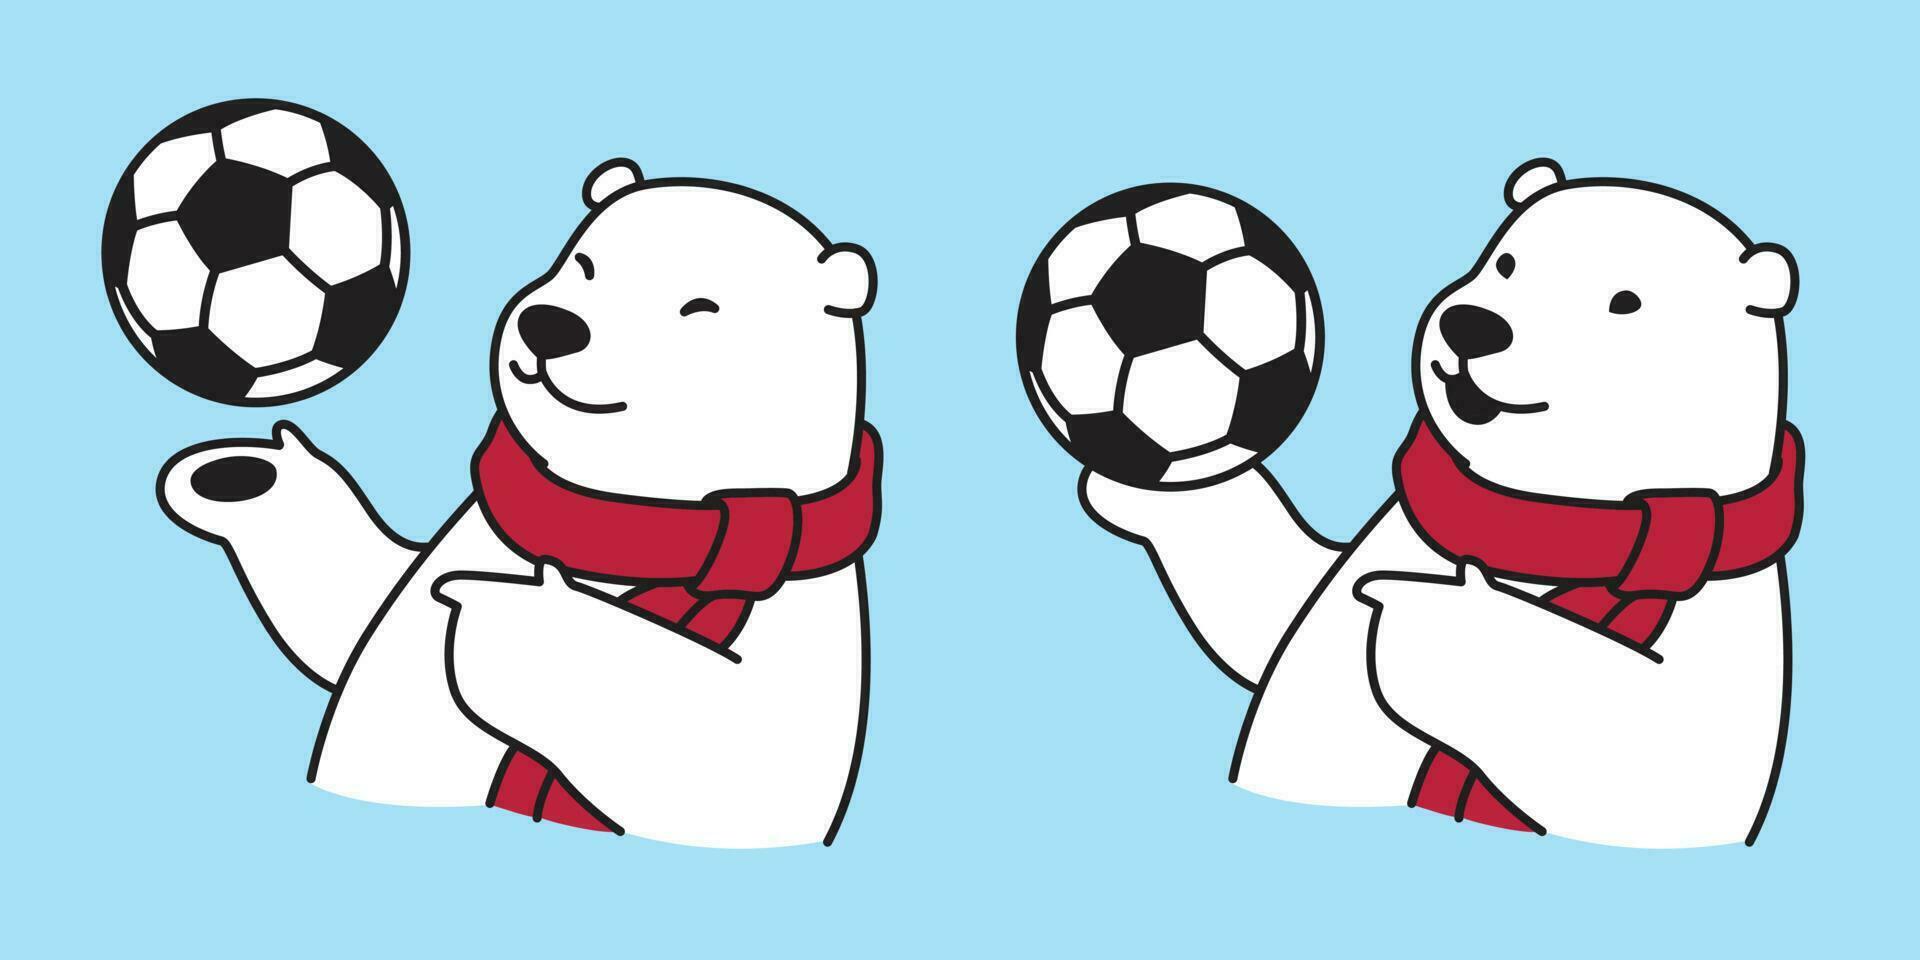 ours vecteur football Balle Football polaire ours personnage dessin animé logo icône écharpe illustration